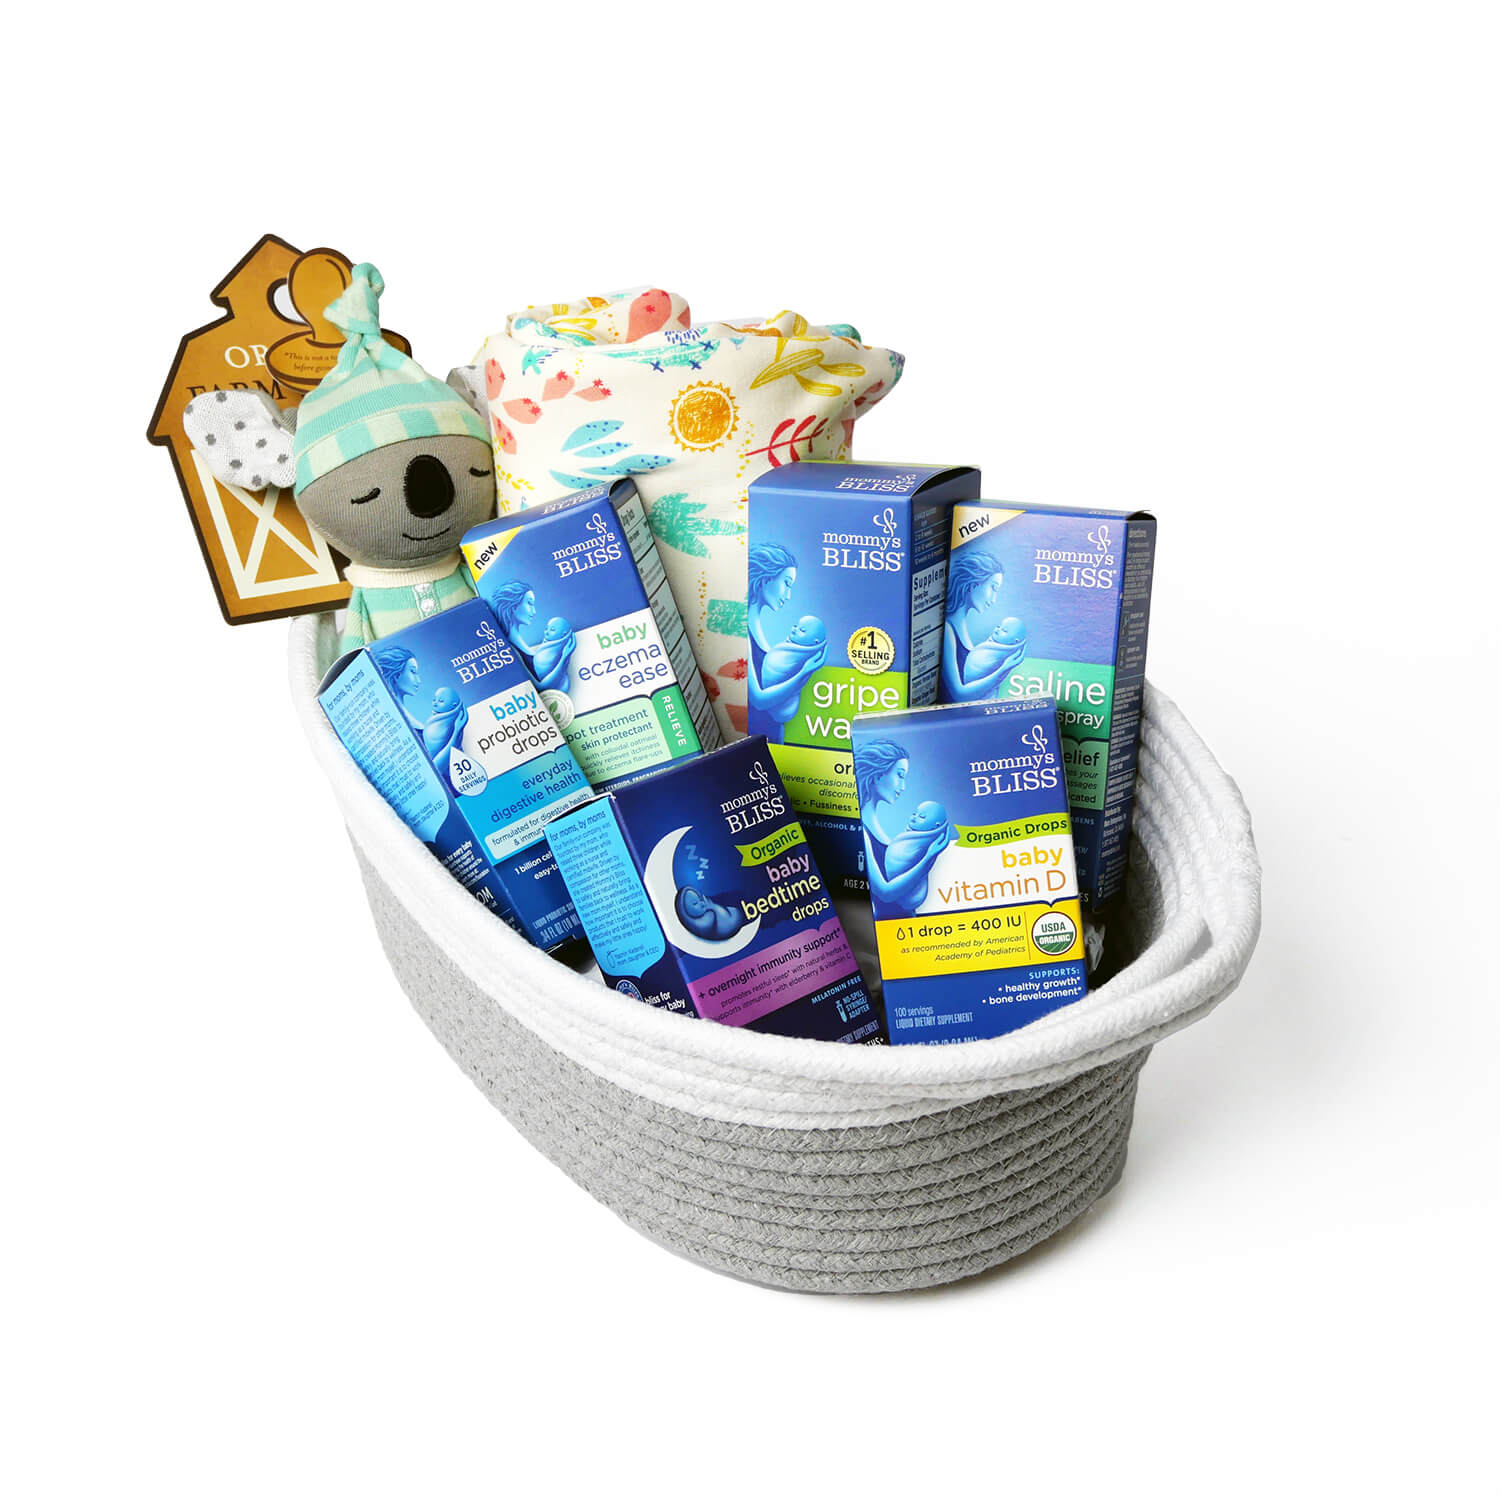 A basket of baby essentials 